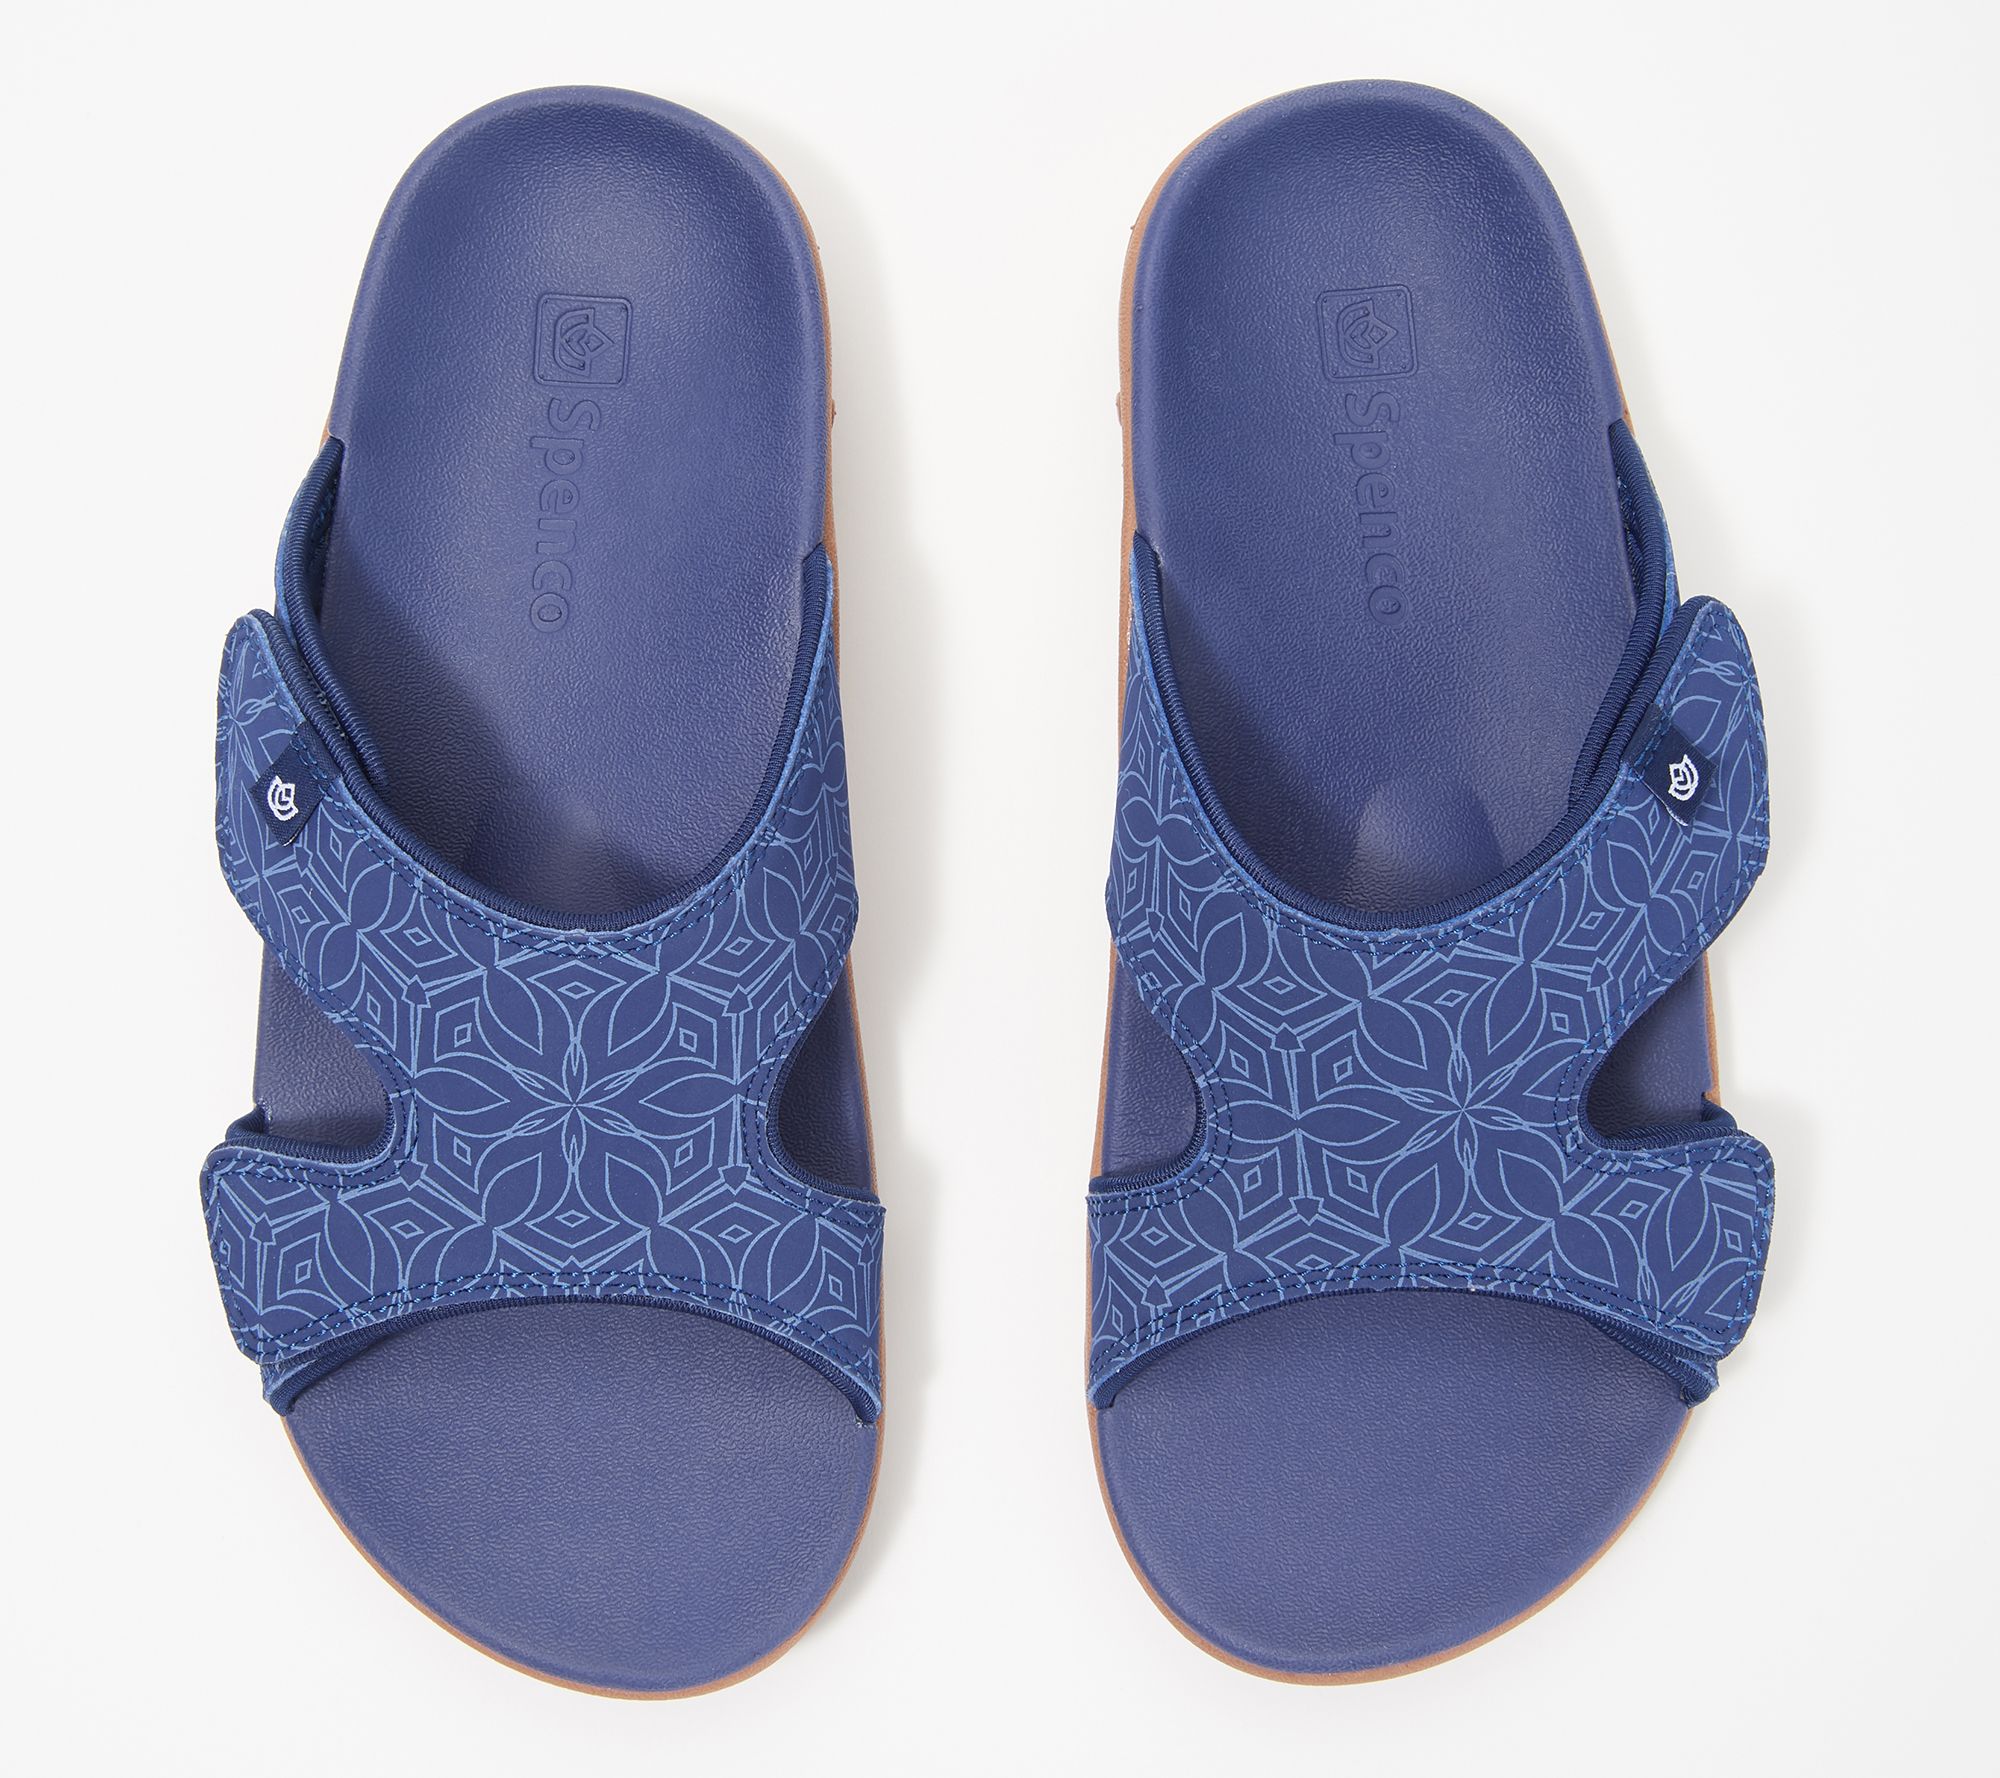 Spenco Orthotic Slide Sandals - Kholo Luau  Slide sandals, Sandals,  Leather wedge sandals